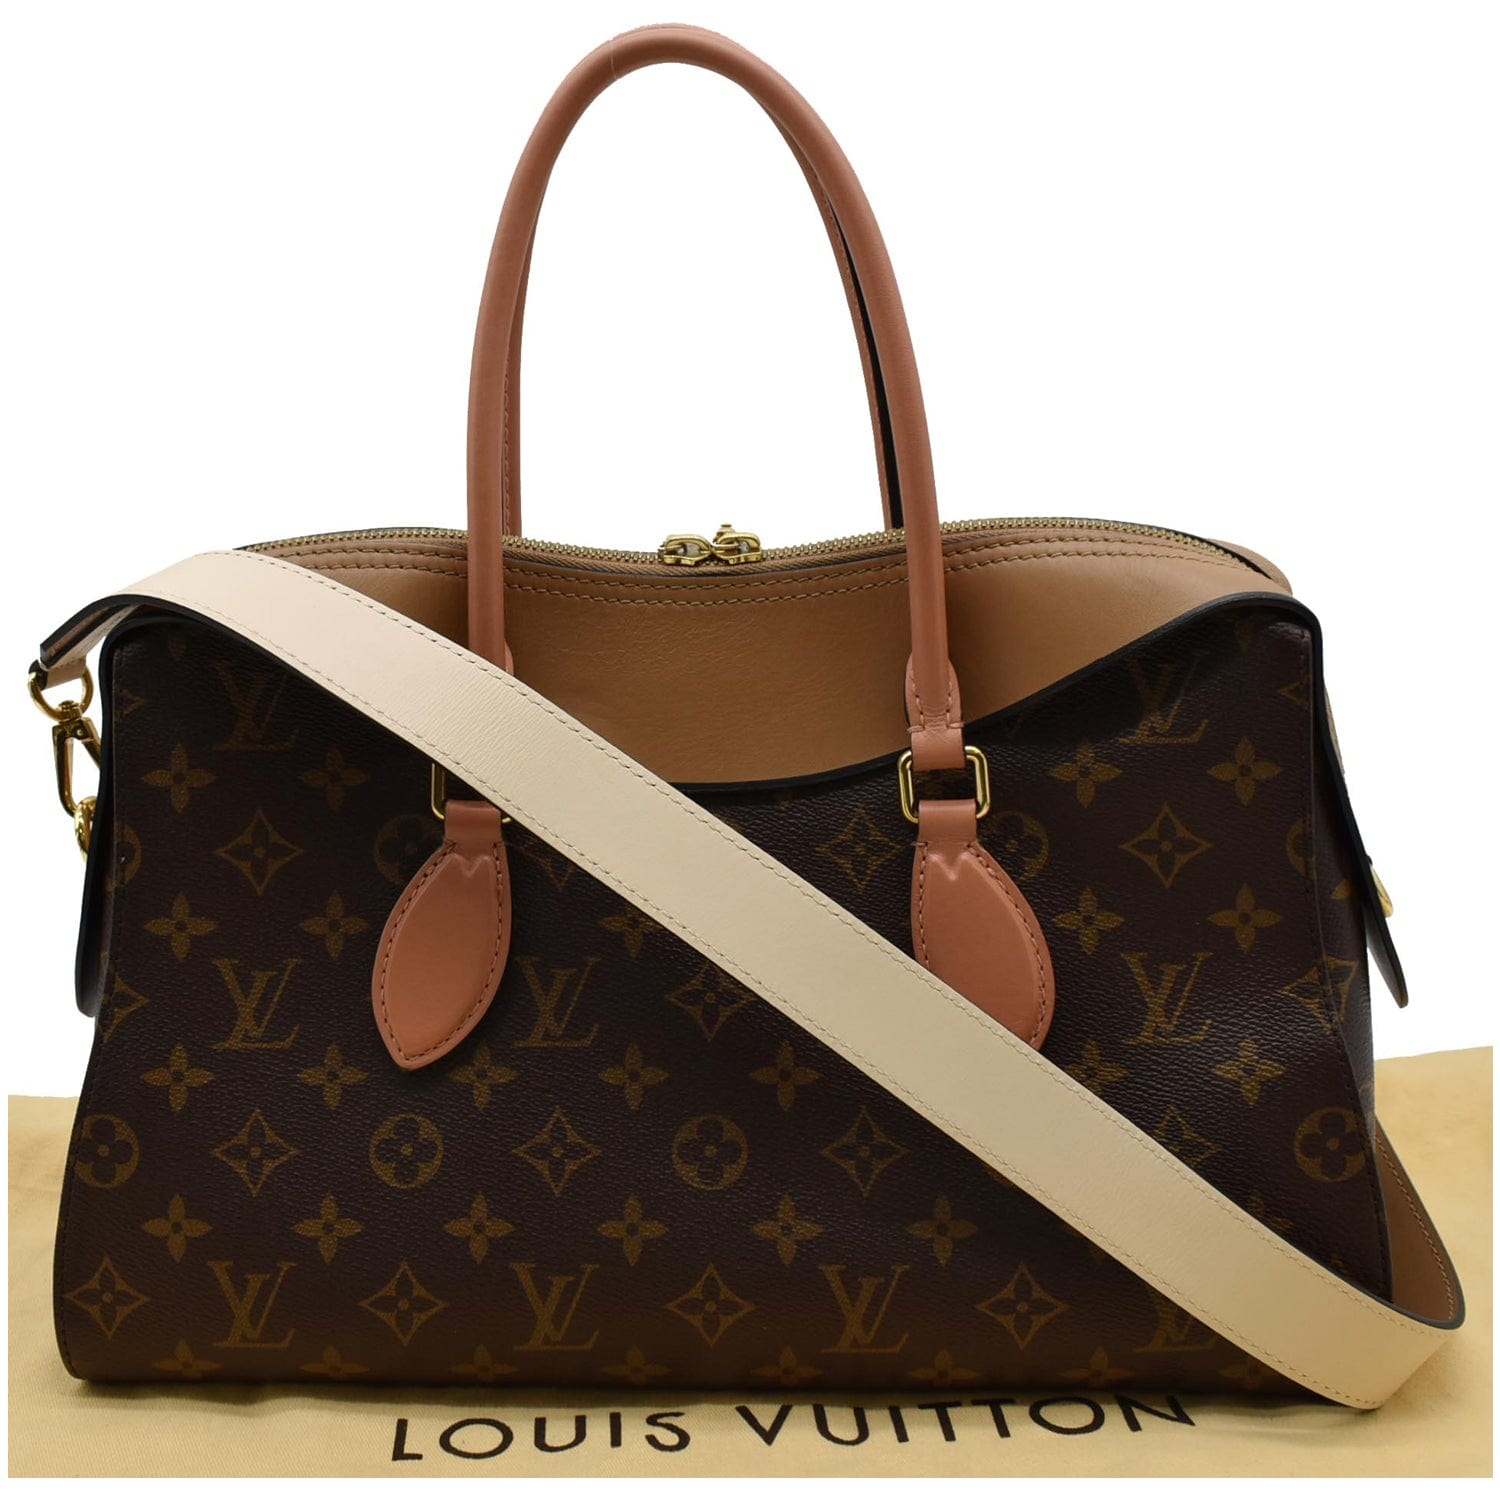 Tuileries bag in brown monogram canvas Louis Vuitton - Second Hand